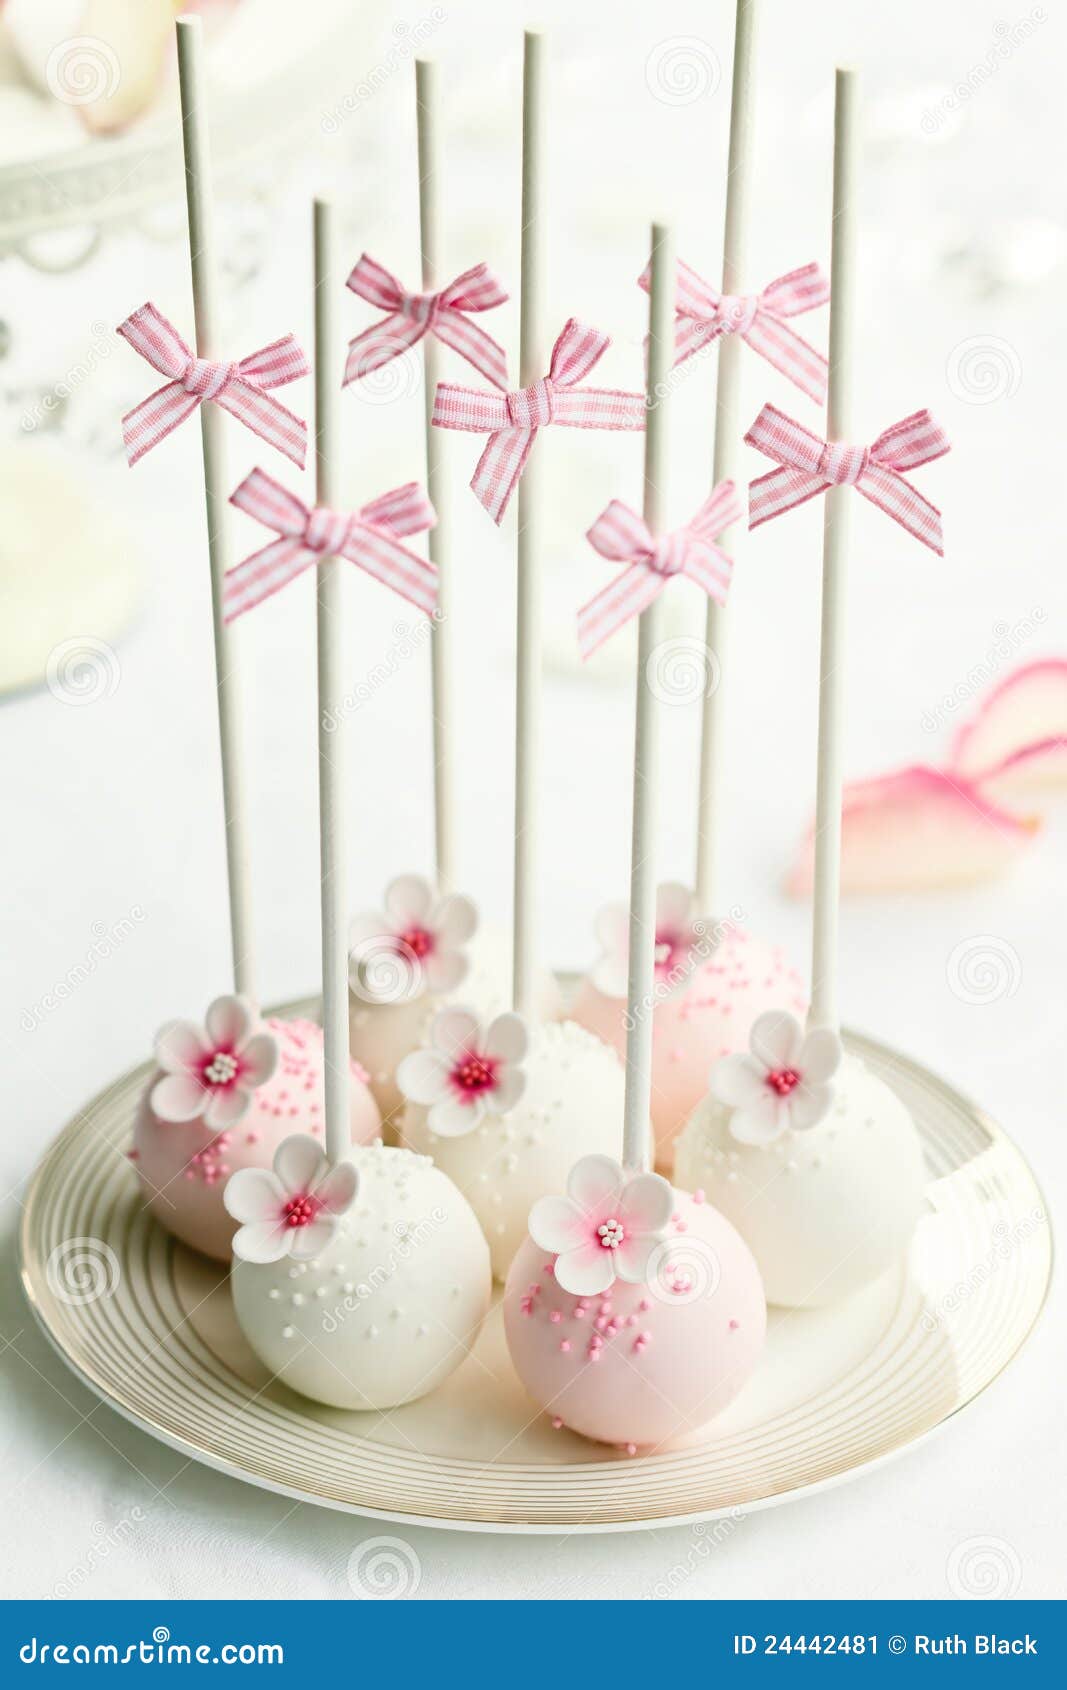 Wedding cake pops stock image. Image of popsicles, ornate - 24442481